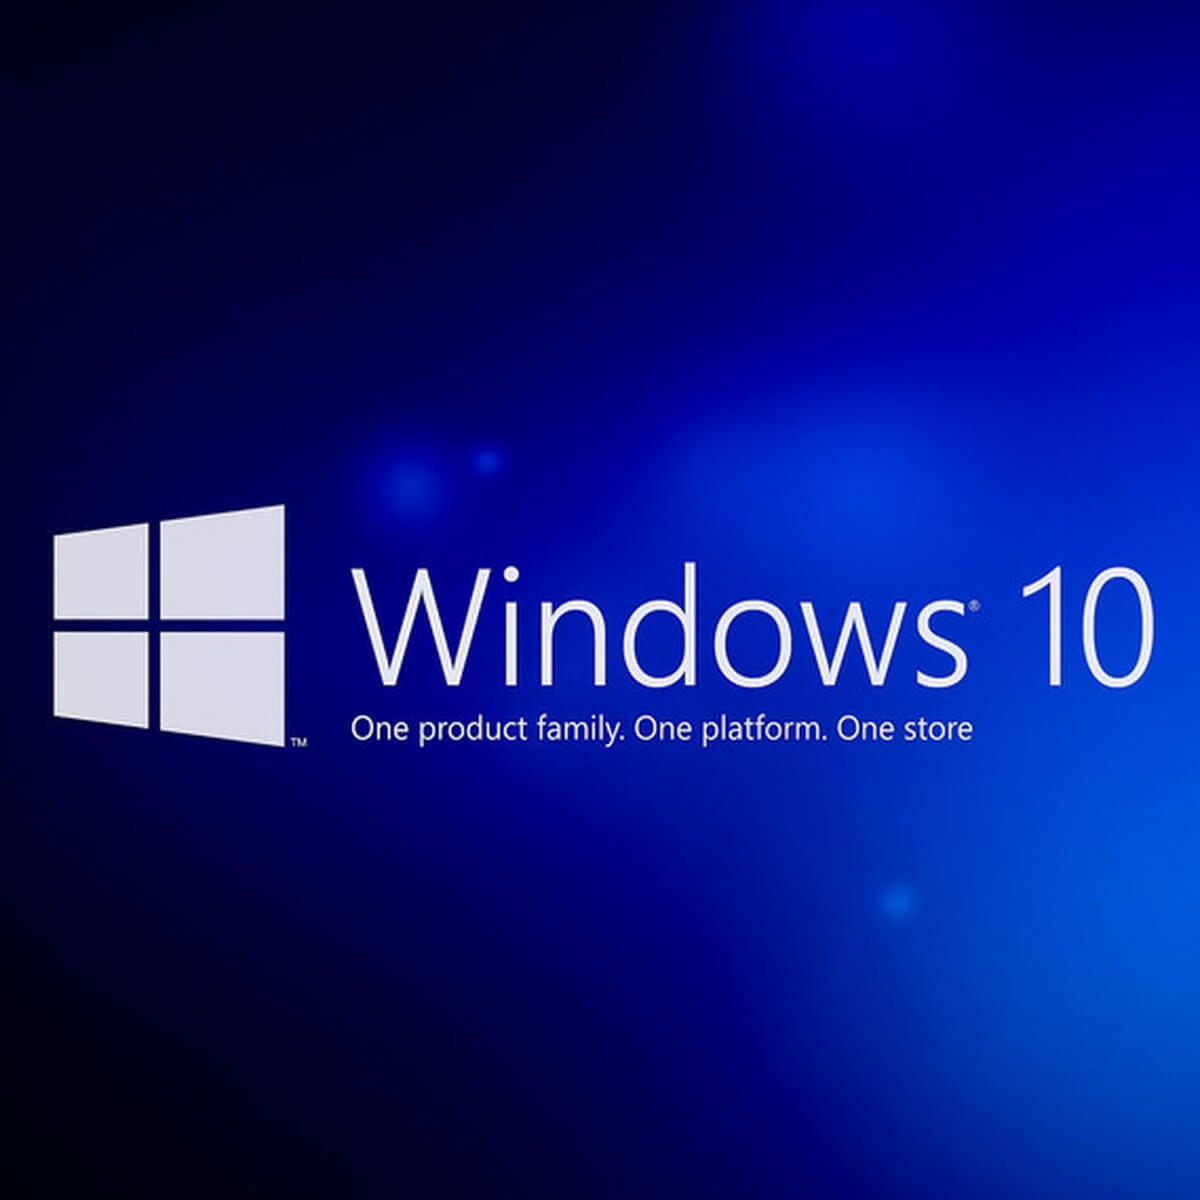 FIX Windows Update errors with Microsoft's dedicated tool